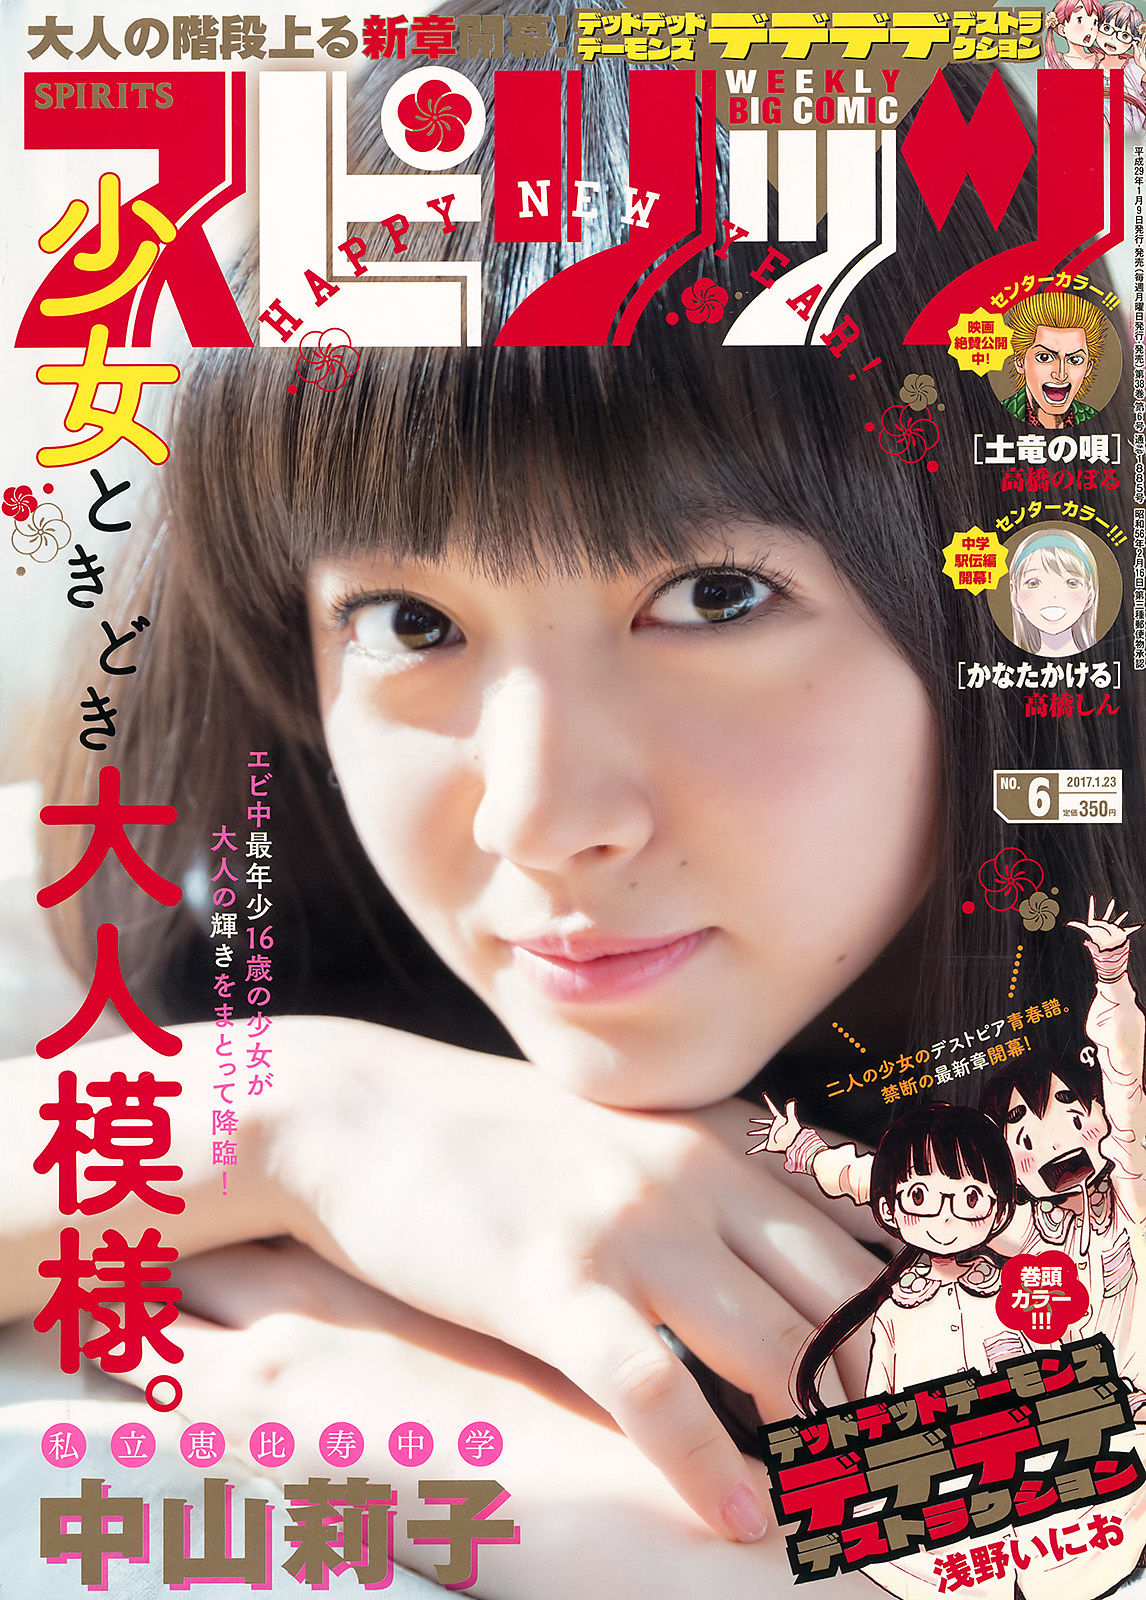 [Weekly Big Comic Spirits]日本萌妹子:中山莉子无圣光私房照片在线浏览(8P)